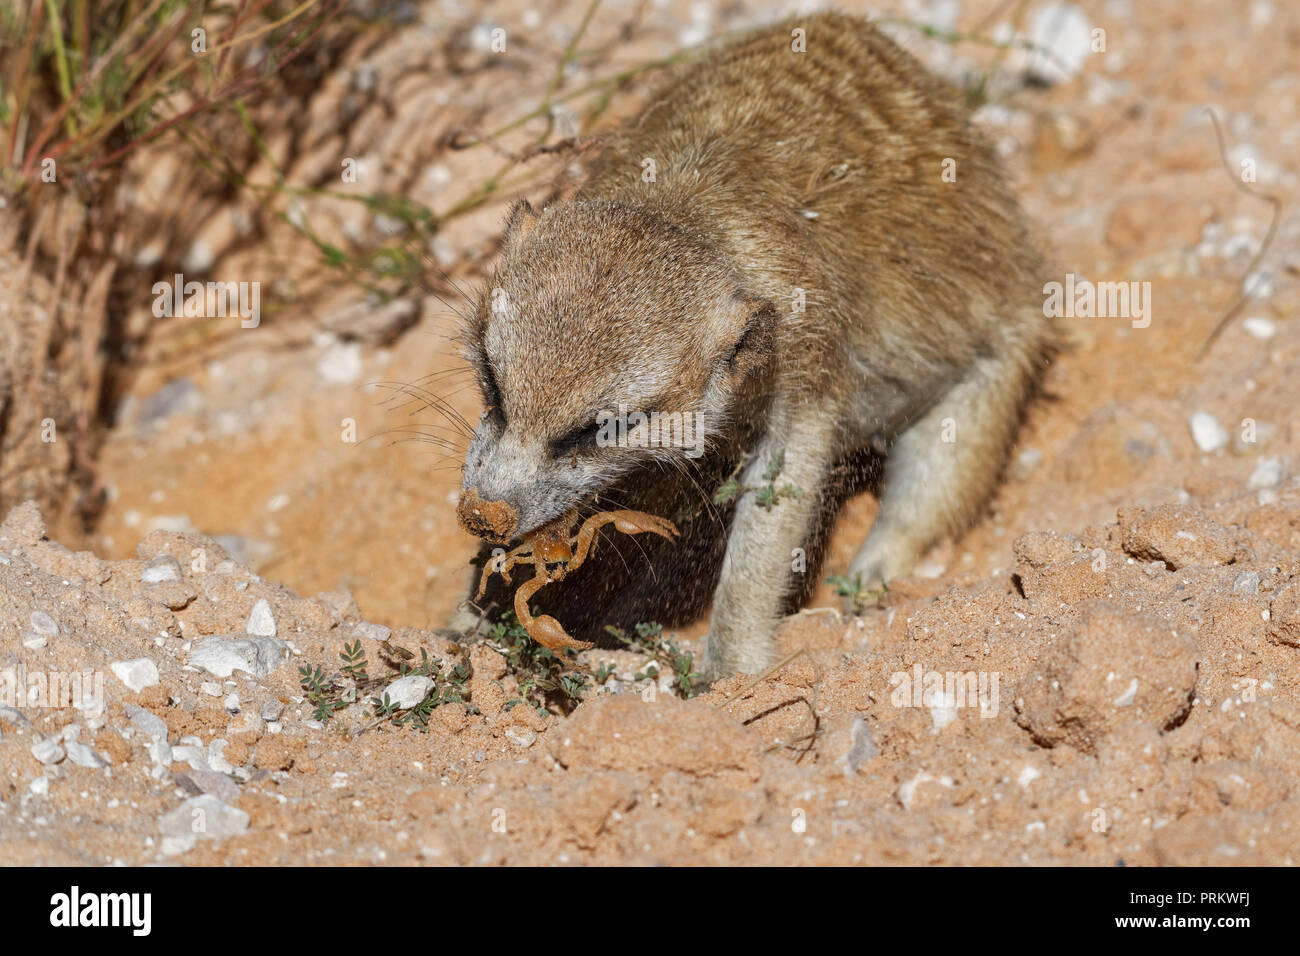 Meerkat (Suricata suricatta), adult animal at the burrow, feeding on a scorpion, Kgalagadi Transfrontier Park, Northern Cape, South Africa, Africa Stock Photo